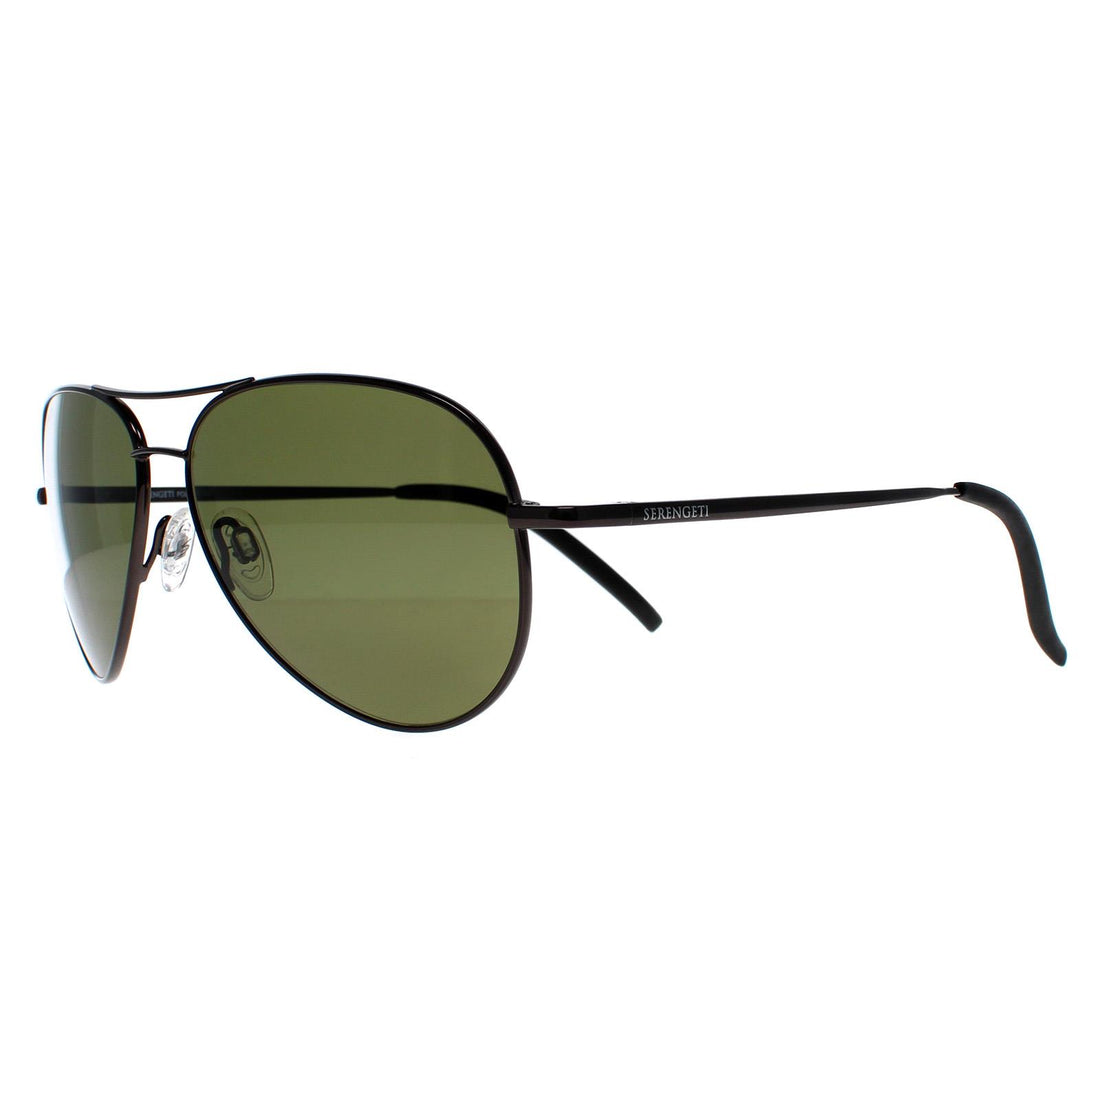 Serengeti Sunglasses Carrara 8554 Shiny Gunmetal Mineral Polarized 555nm Green